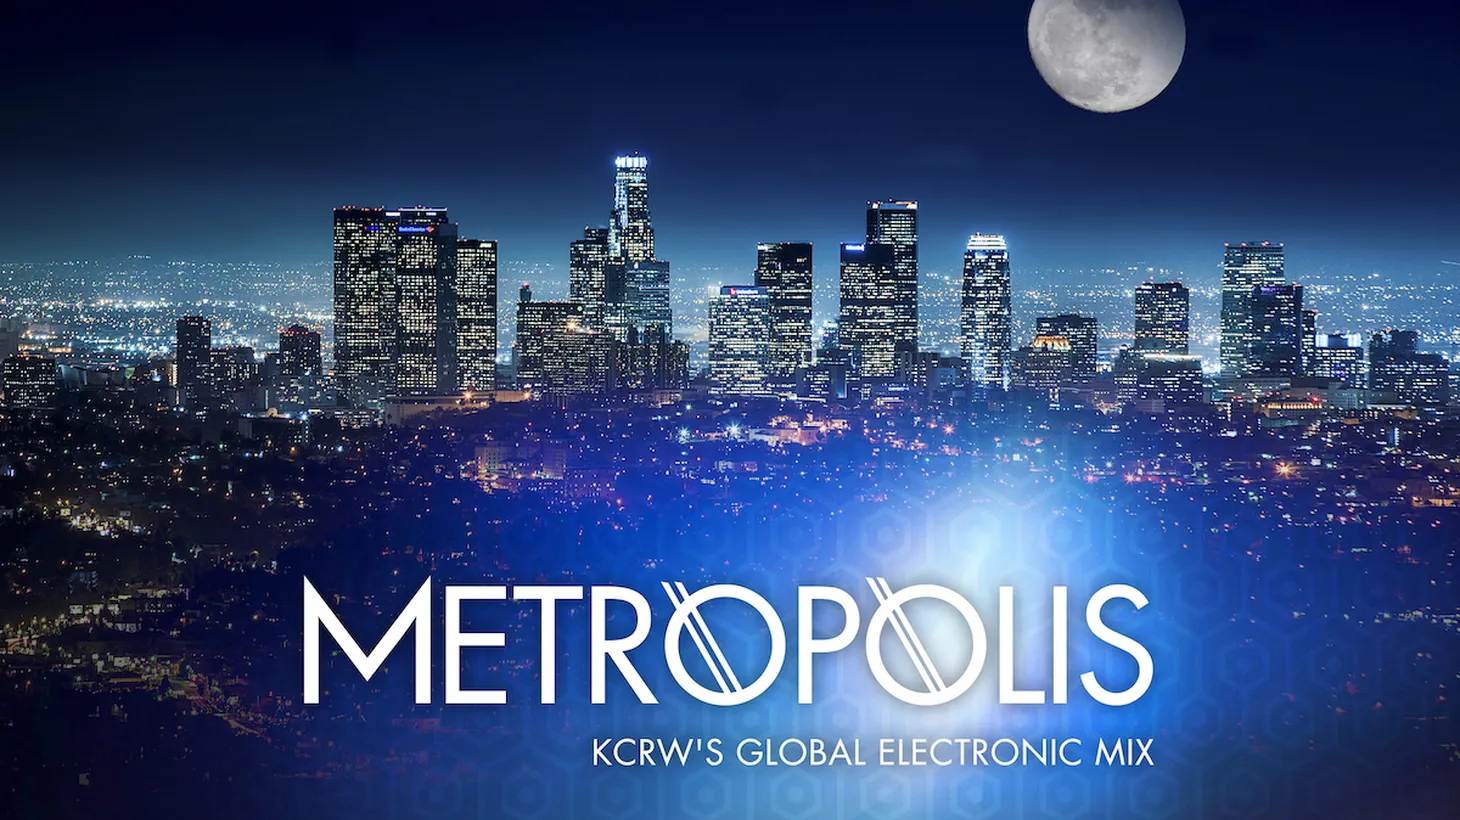 Metropolis playlist, October 31, 2020.